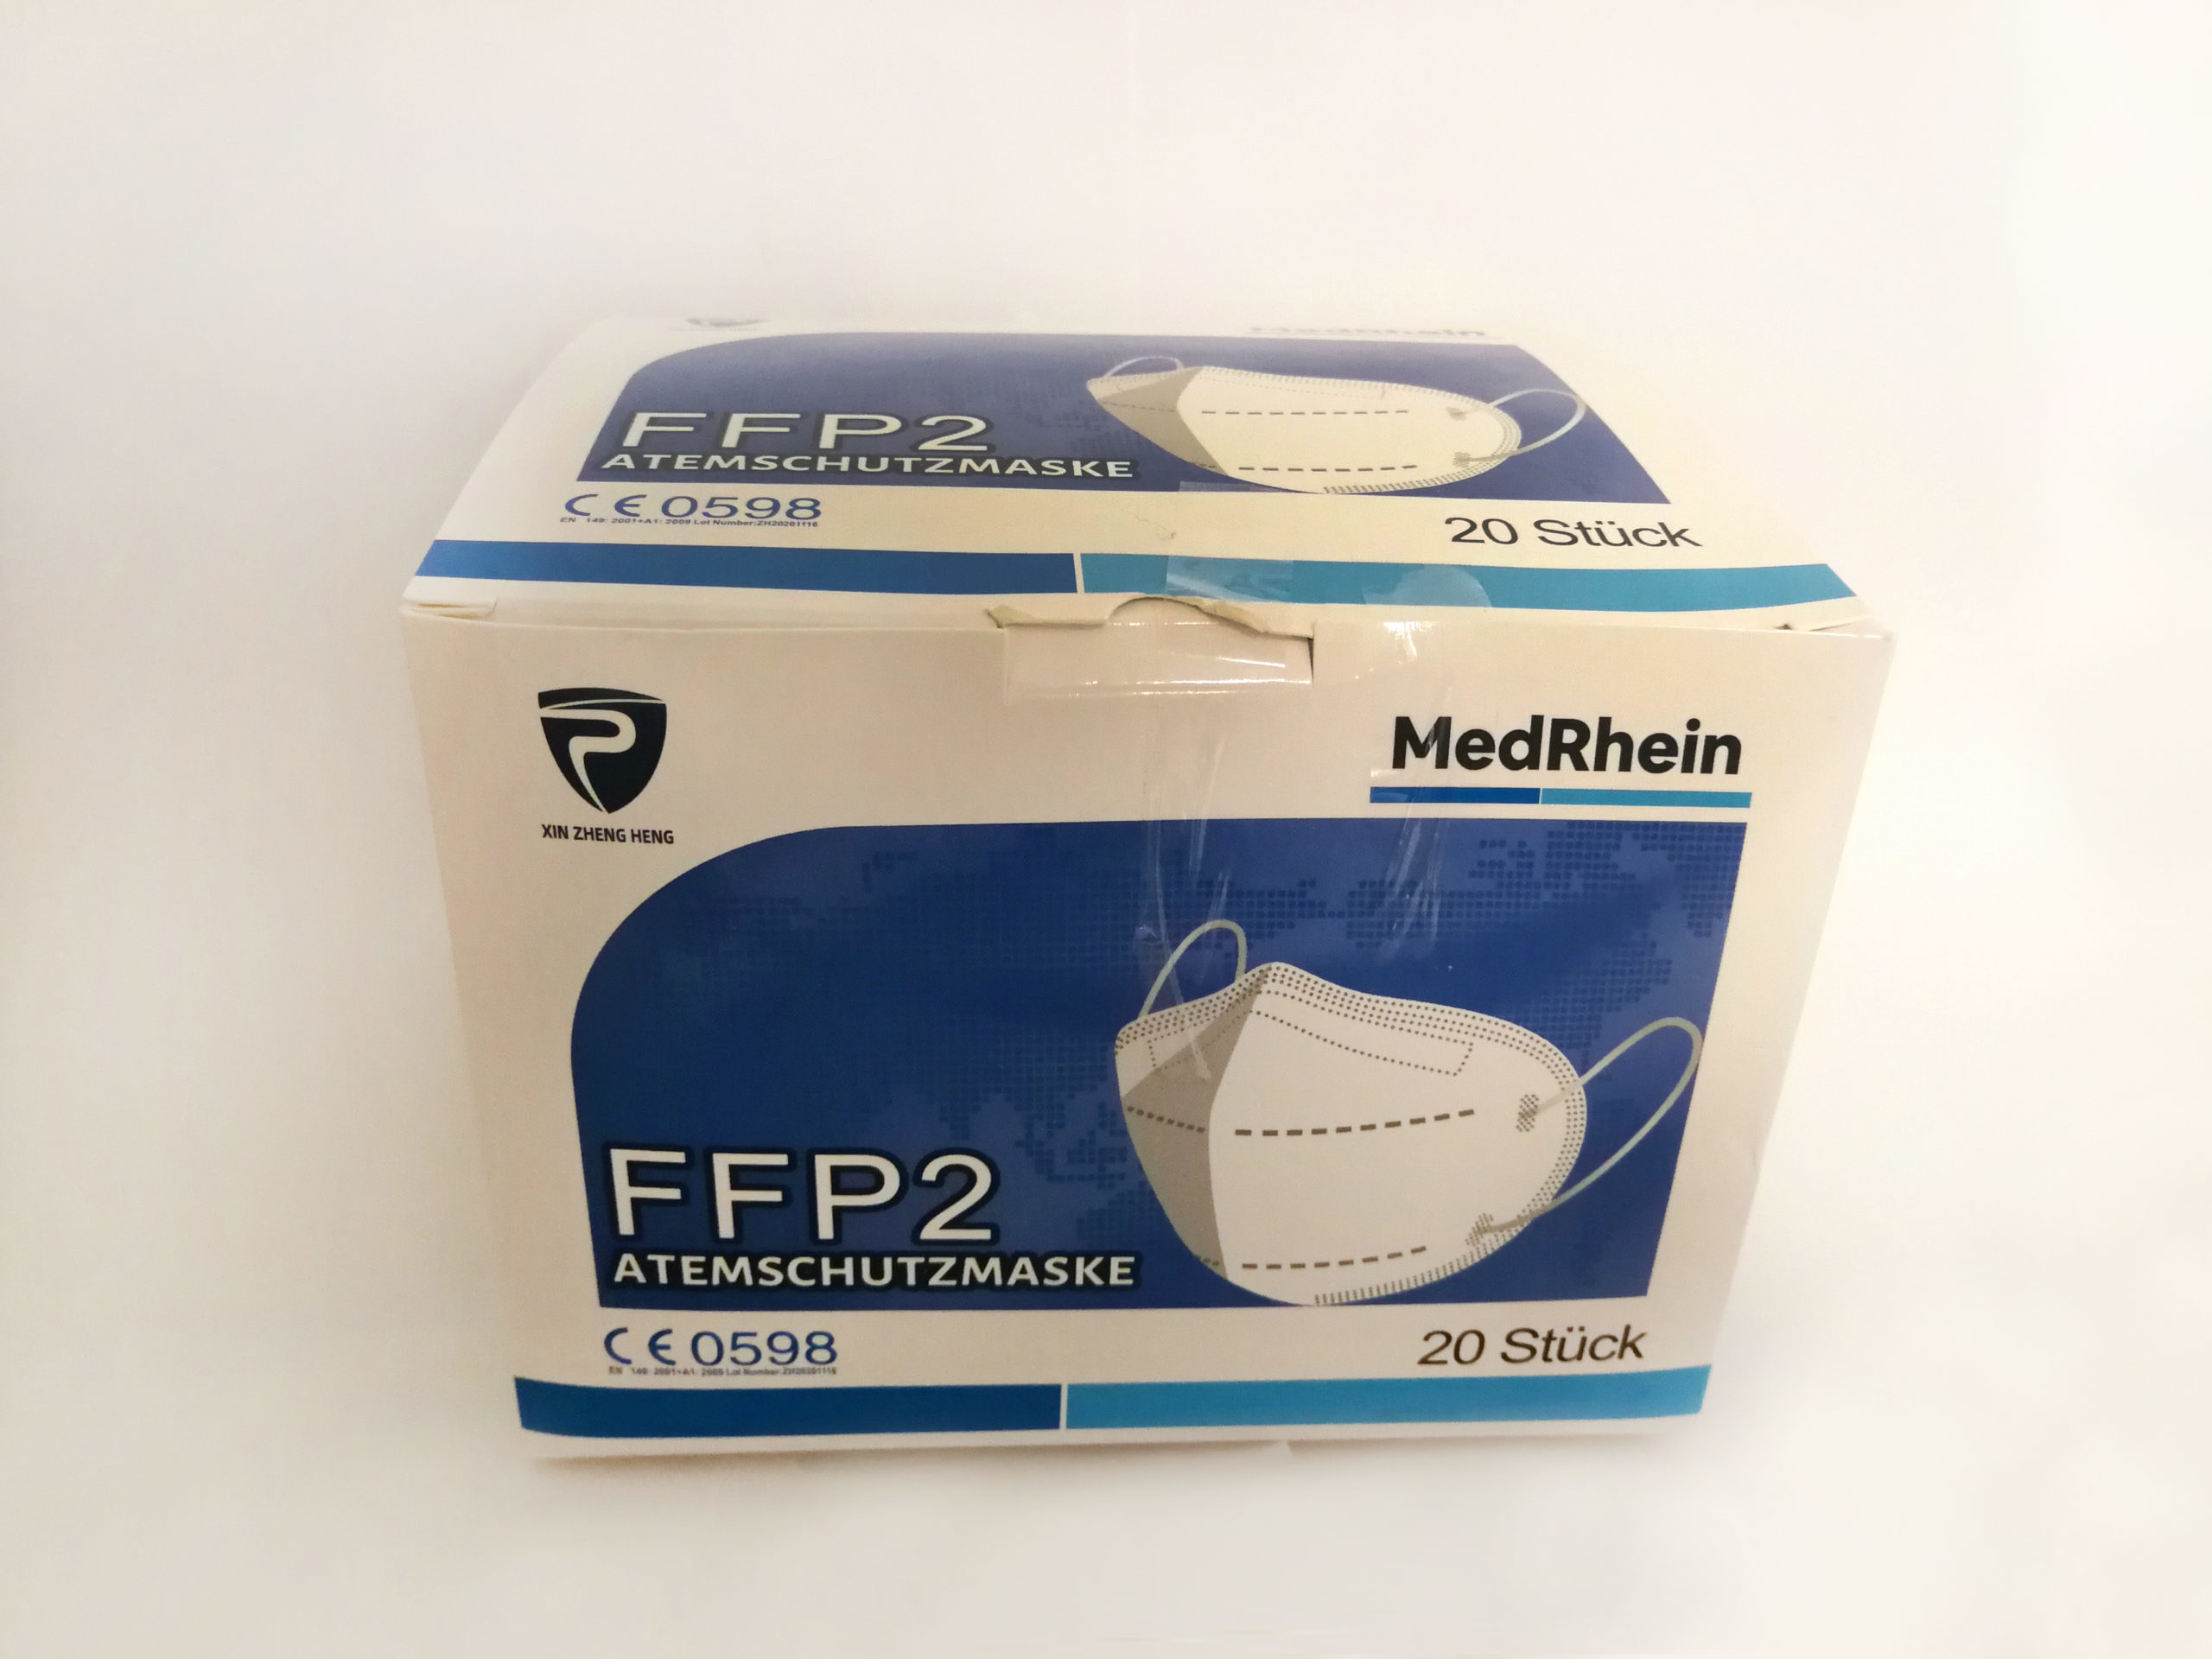 FFP2 Atemschutzsmaske